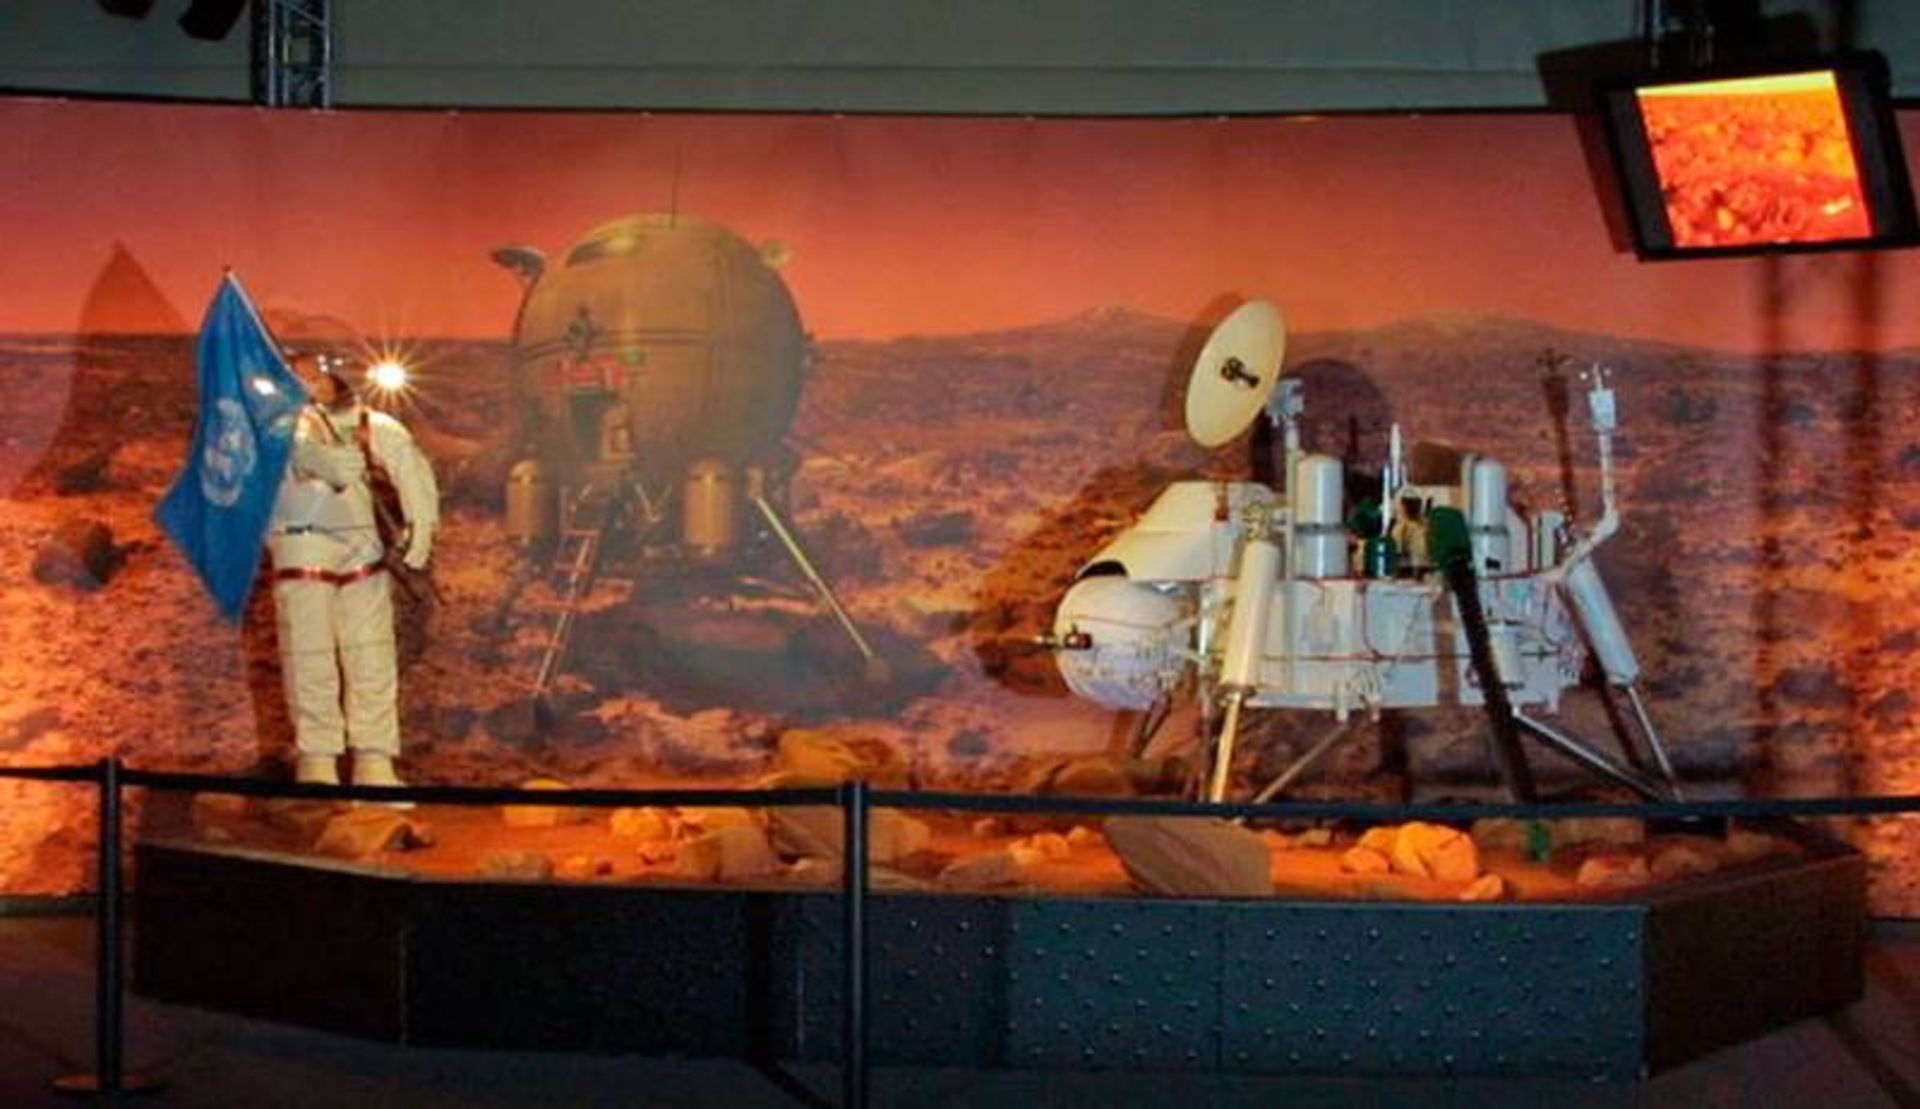 Viking Lander model with astronaut